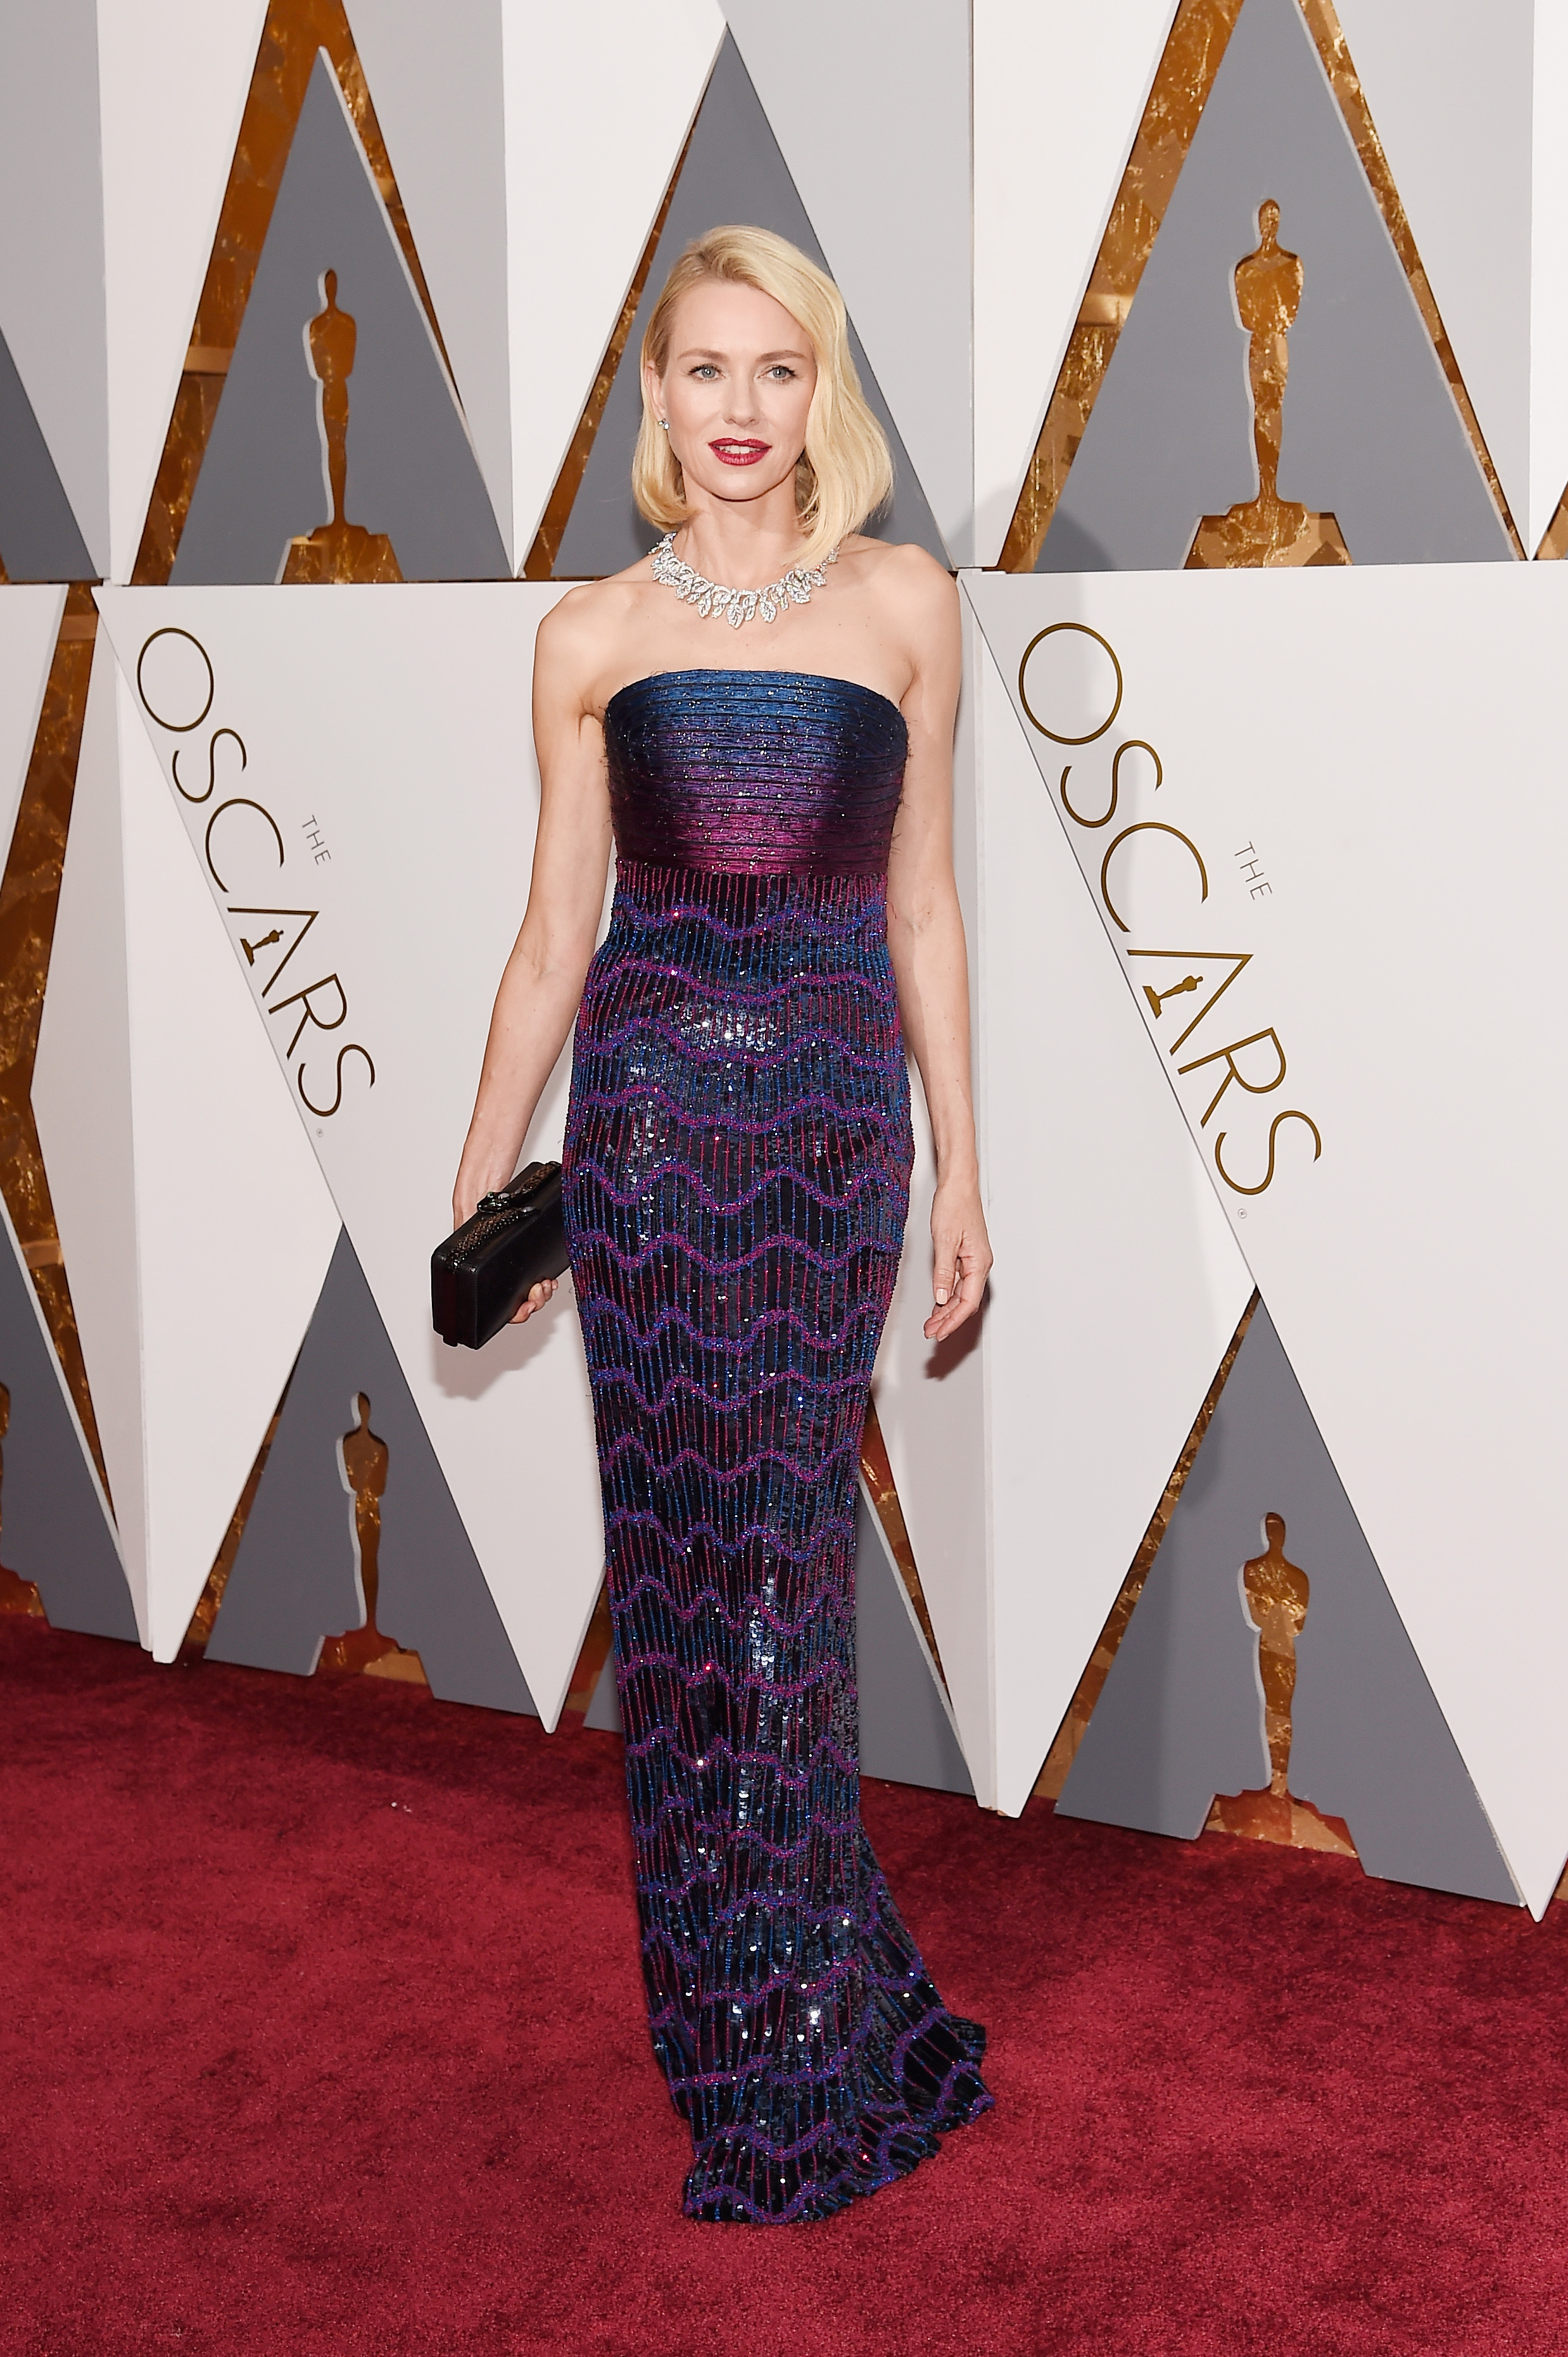 Naomi Watts Giorgio Armani Oscars dresses 2016 dress